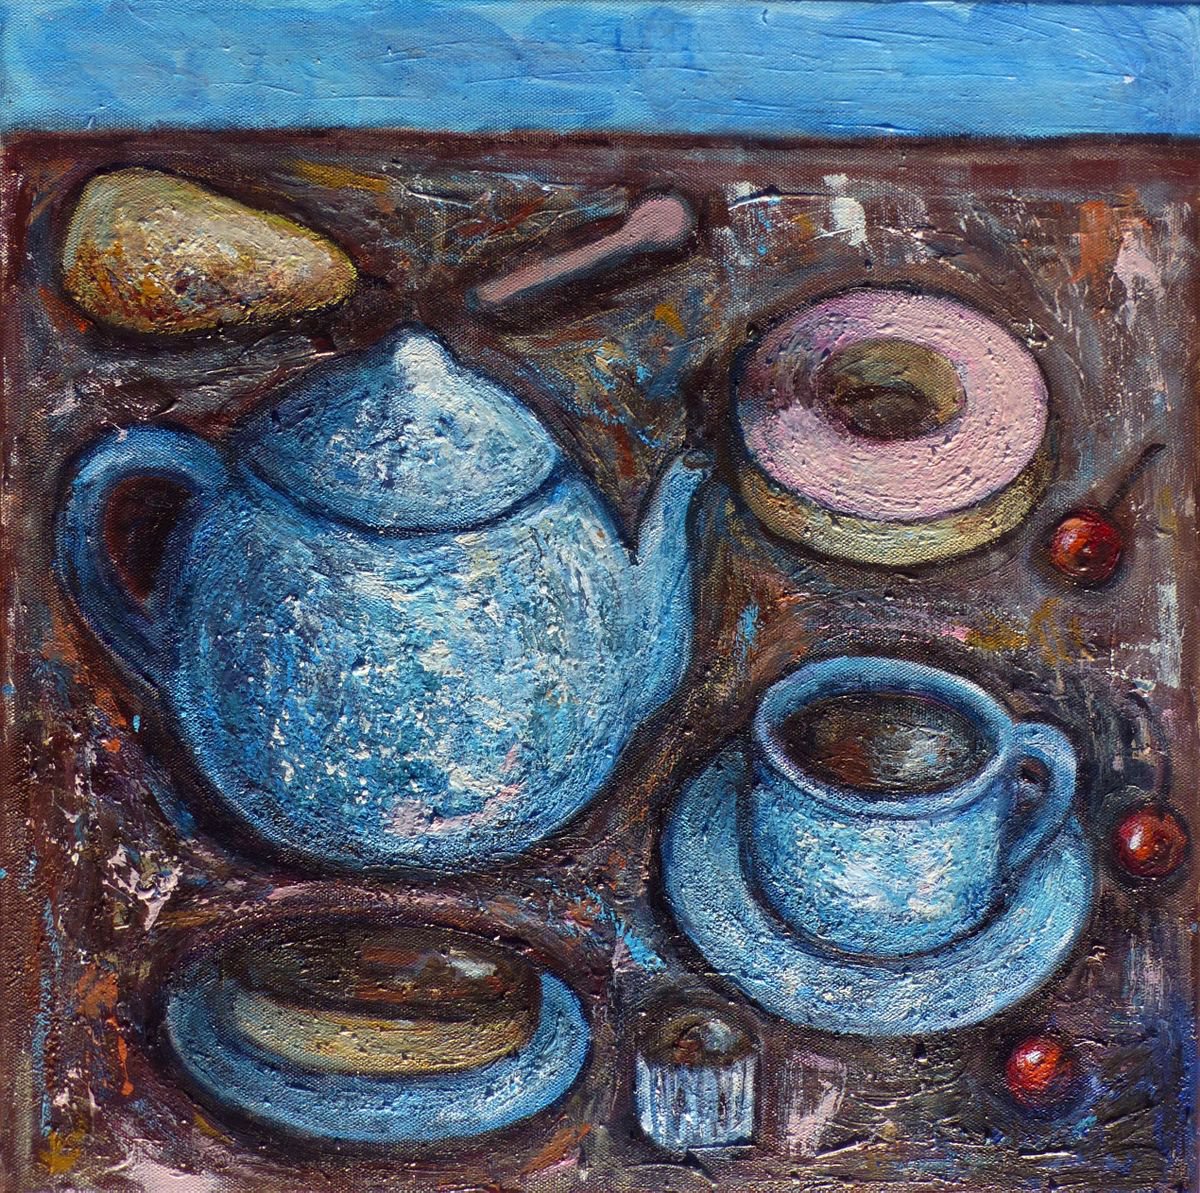 Pause for Tea by Elizabeth Vlasova